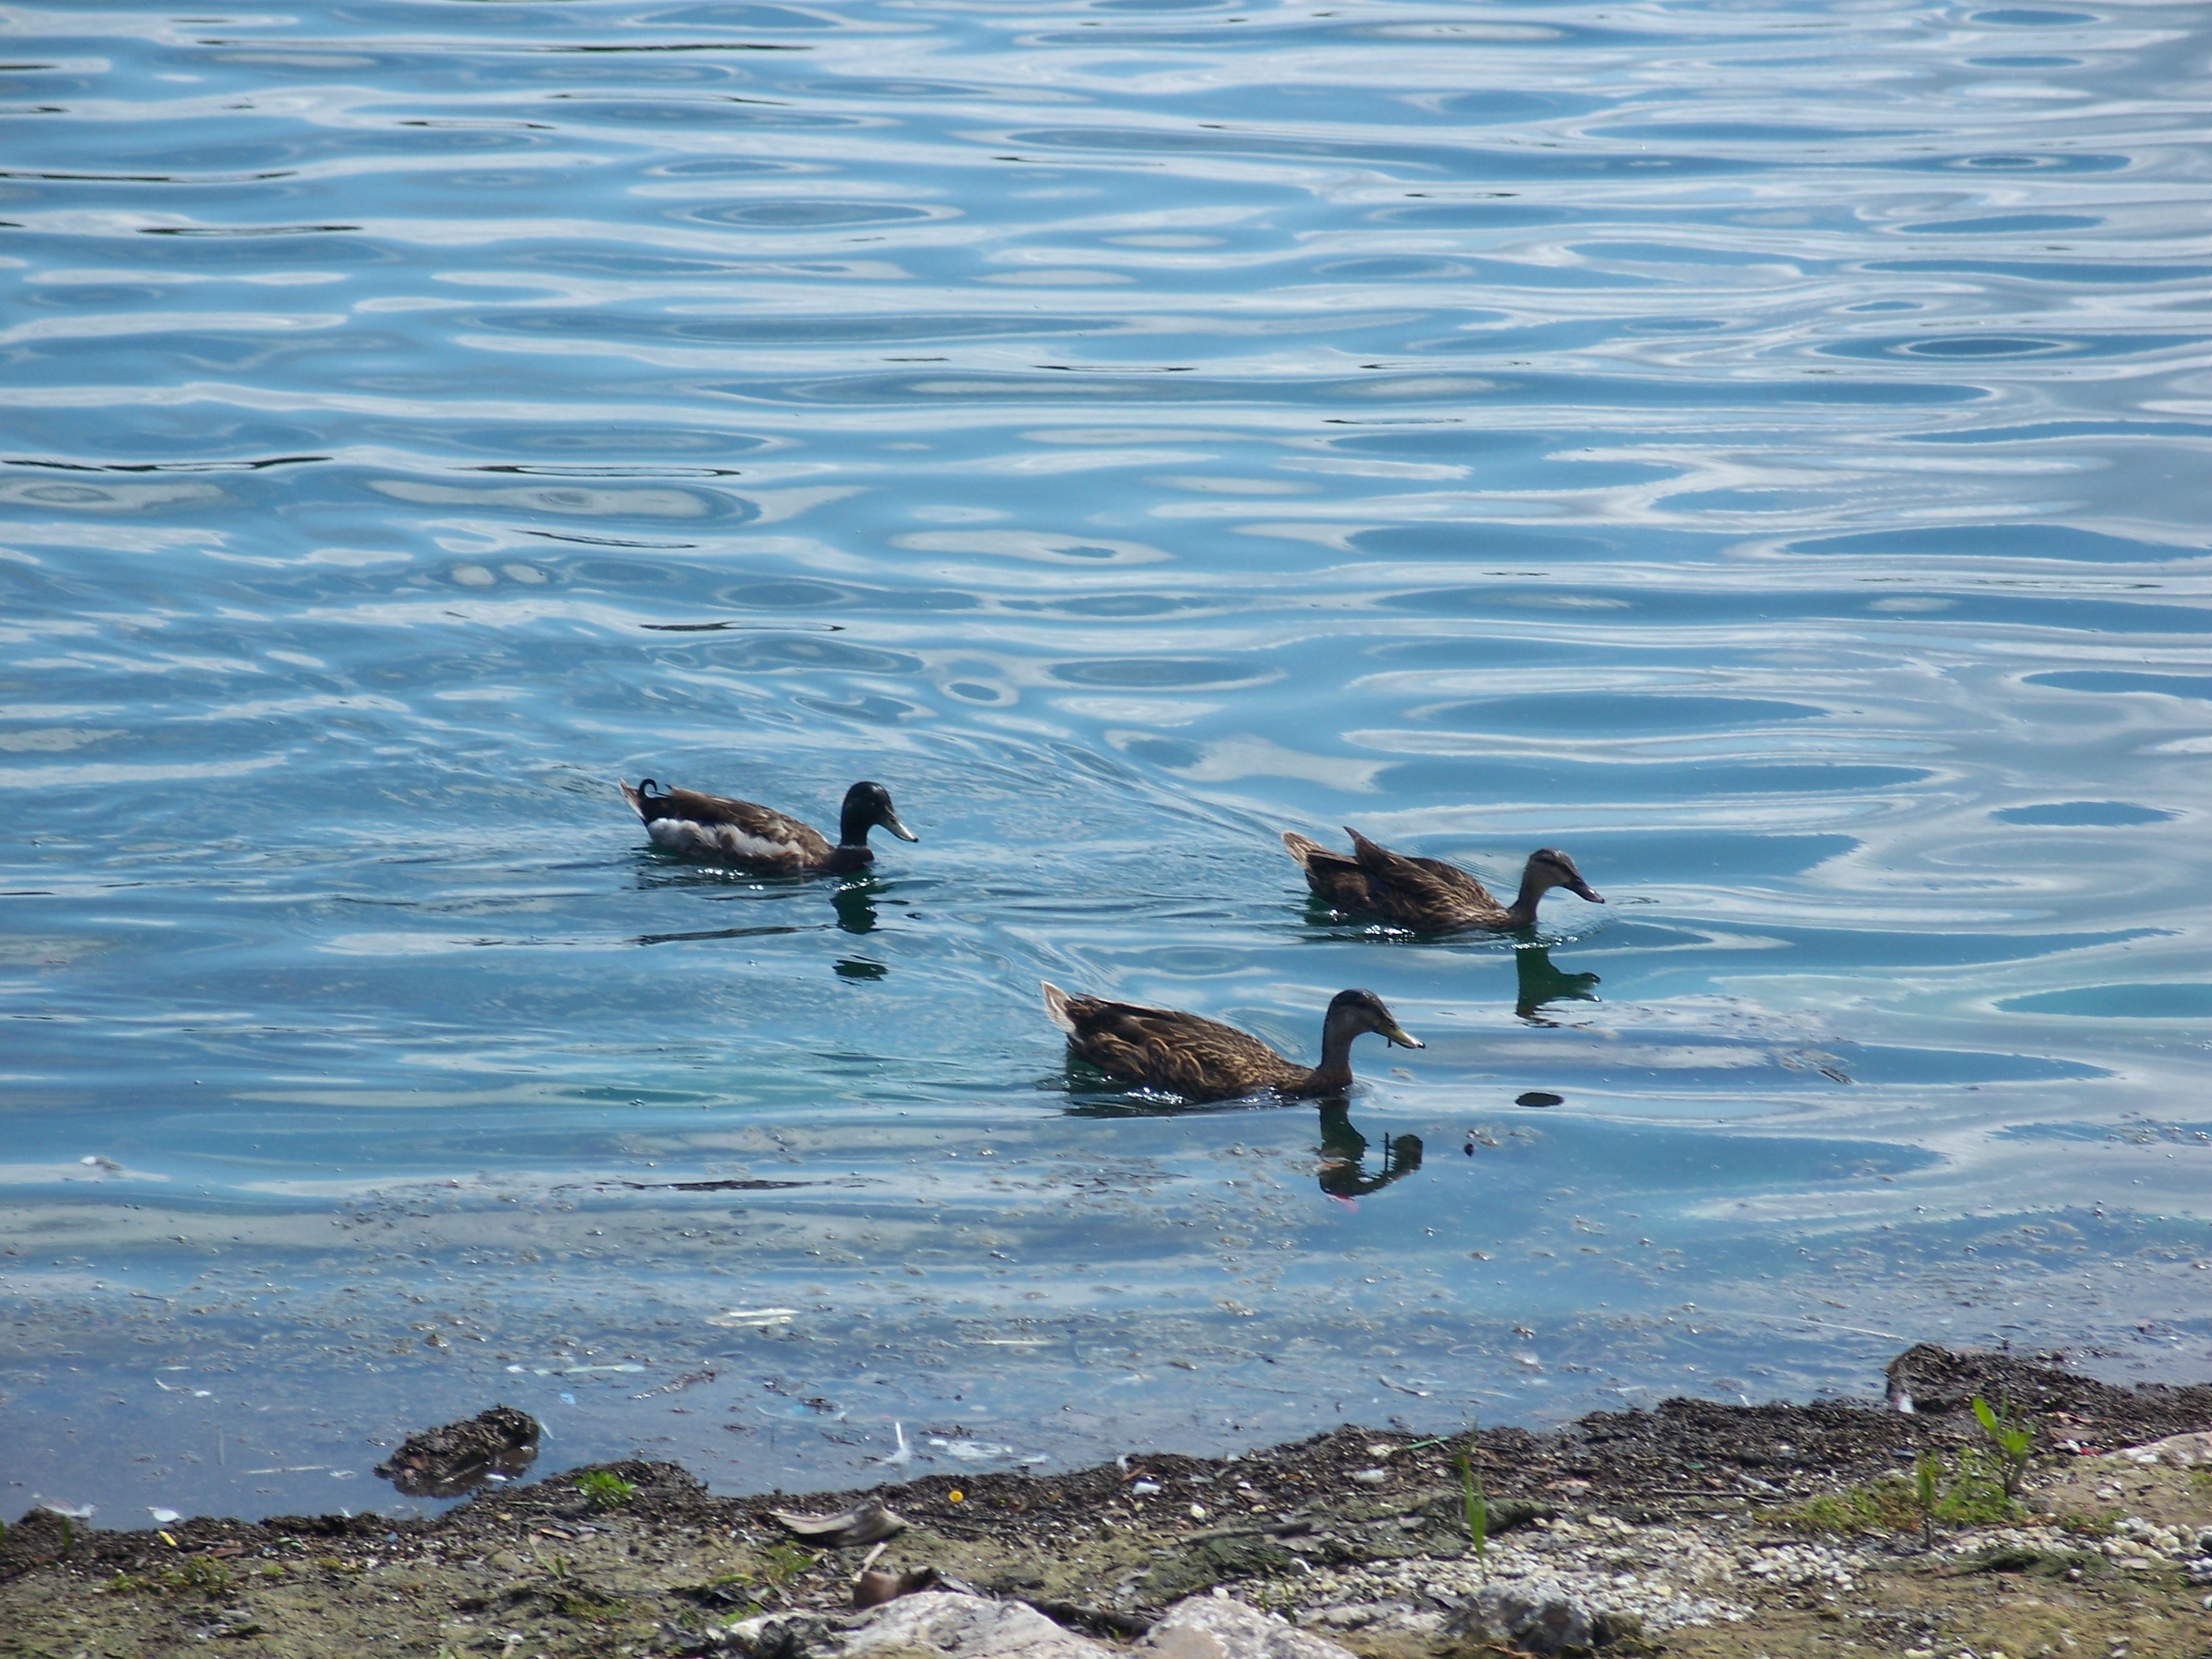 File:Ducks Lake Eola Orlando01.jpg - Wikimedia Commons